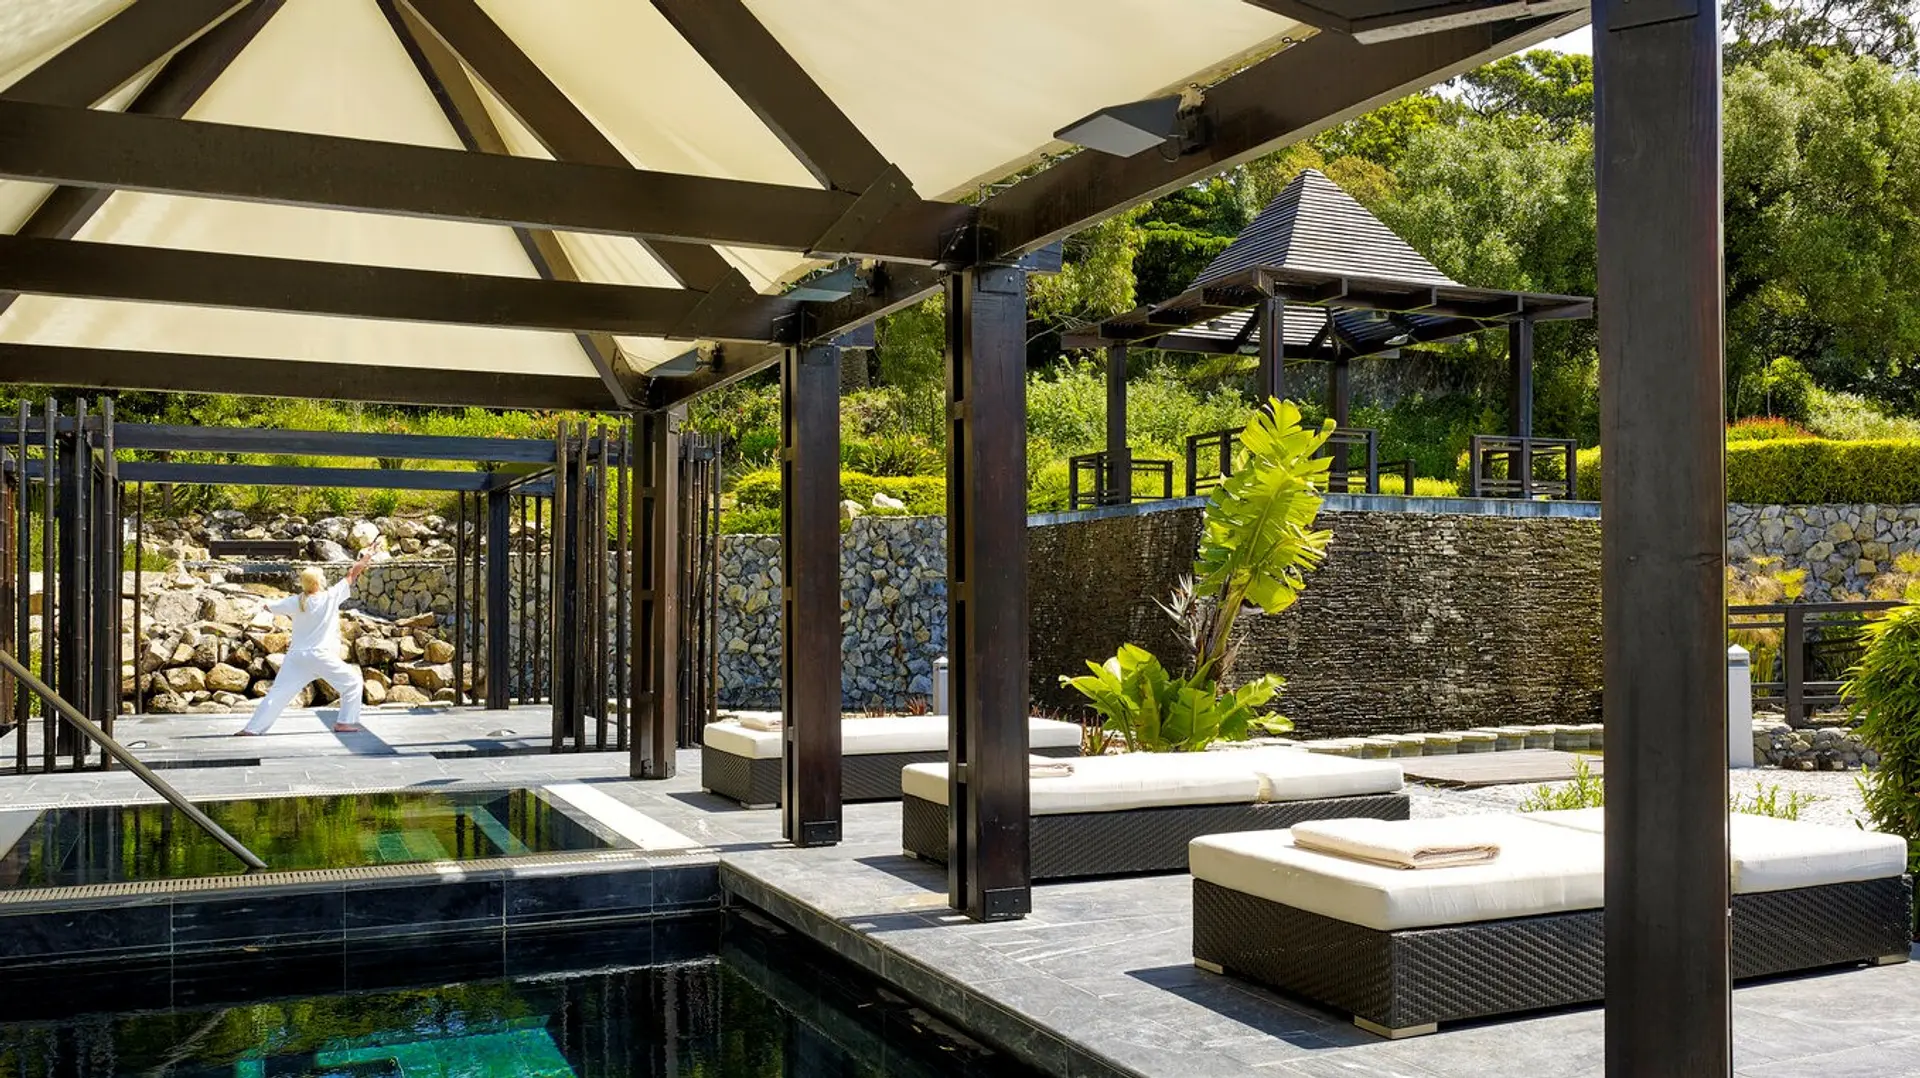 Hotel review Service & Facilities' - Penha Longa Golf Resort - 9